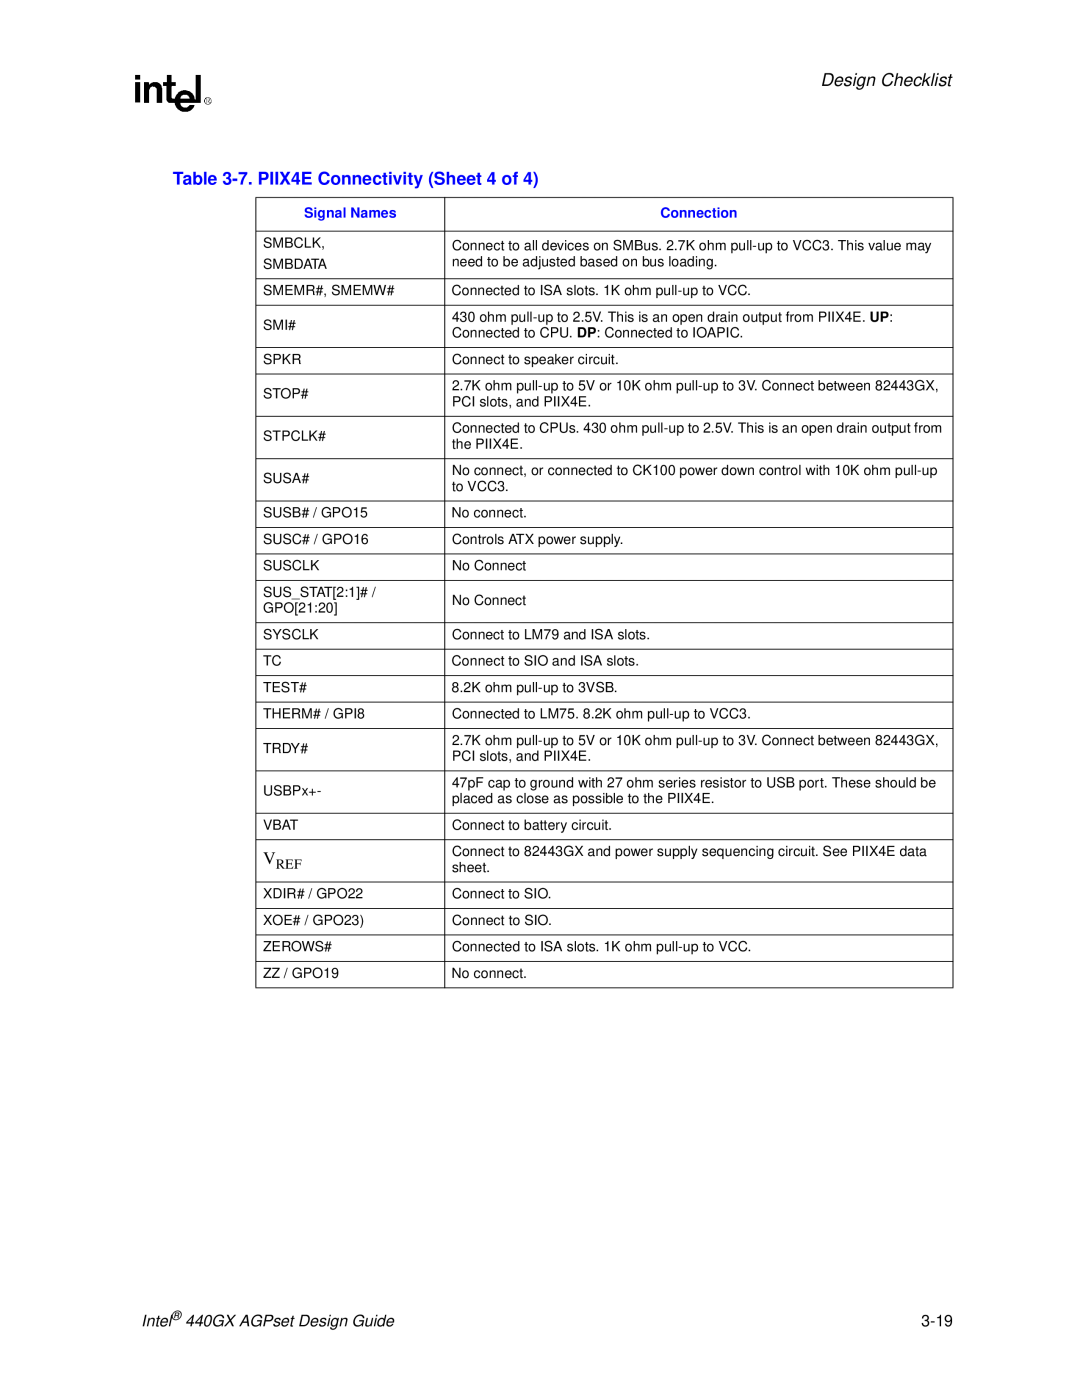 Intel manual 7. PIIX4E Connectivity Sheet 4 of, Design Checklist, Intel440GX AGPset Design Guide, 3-19 